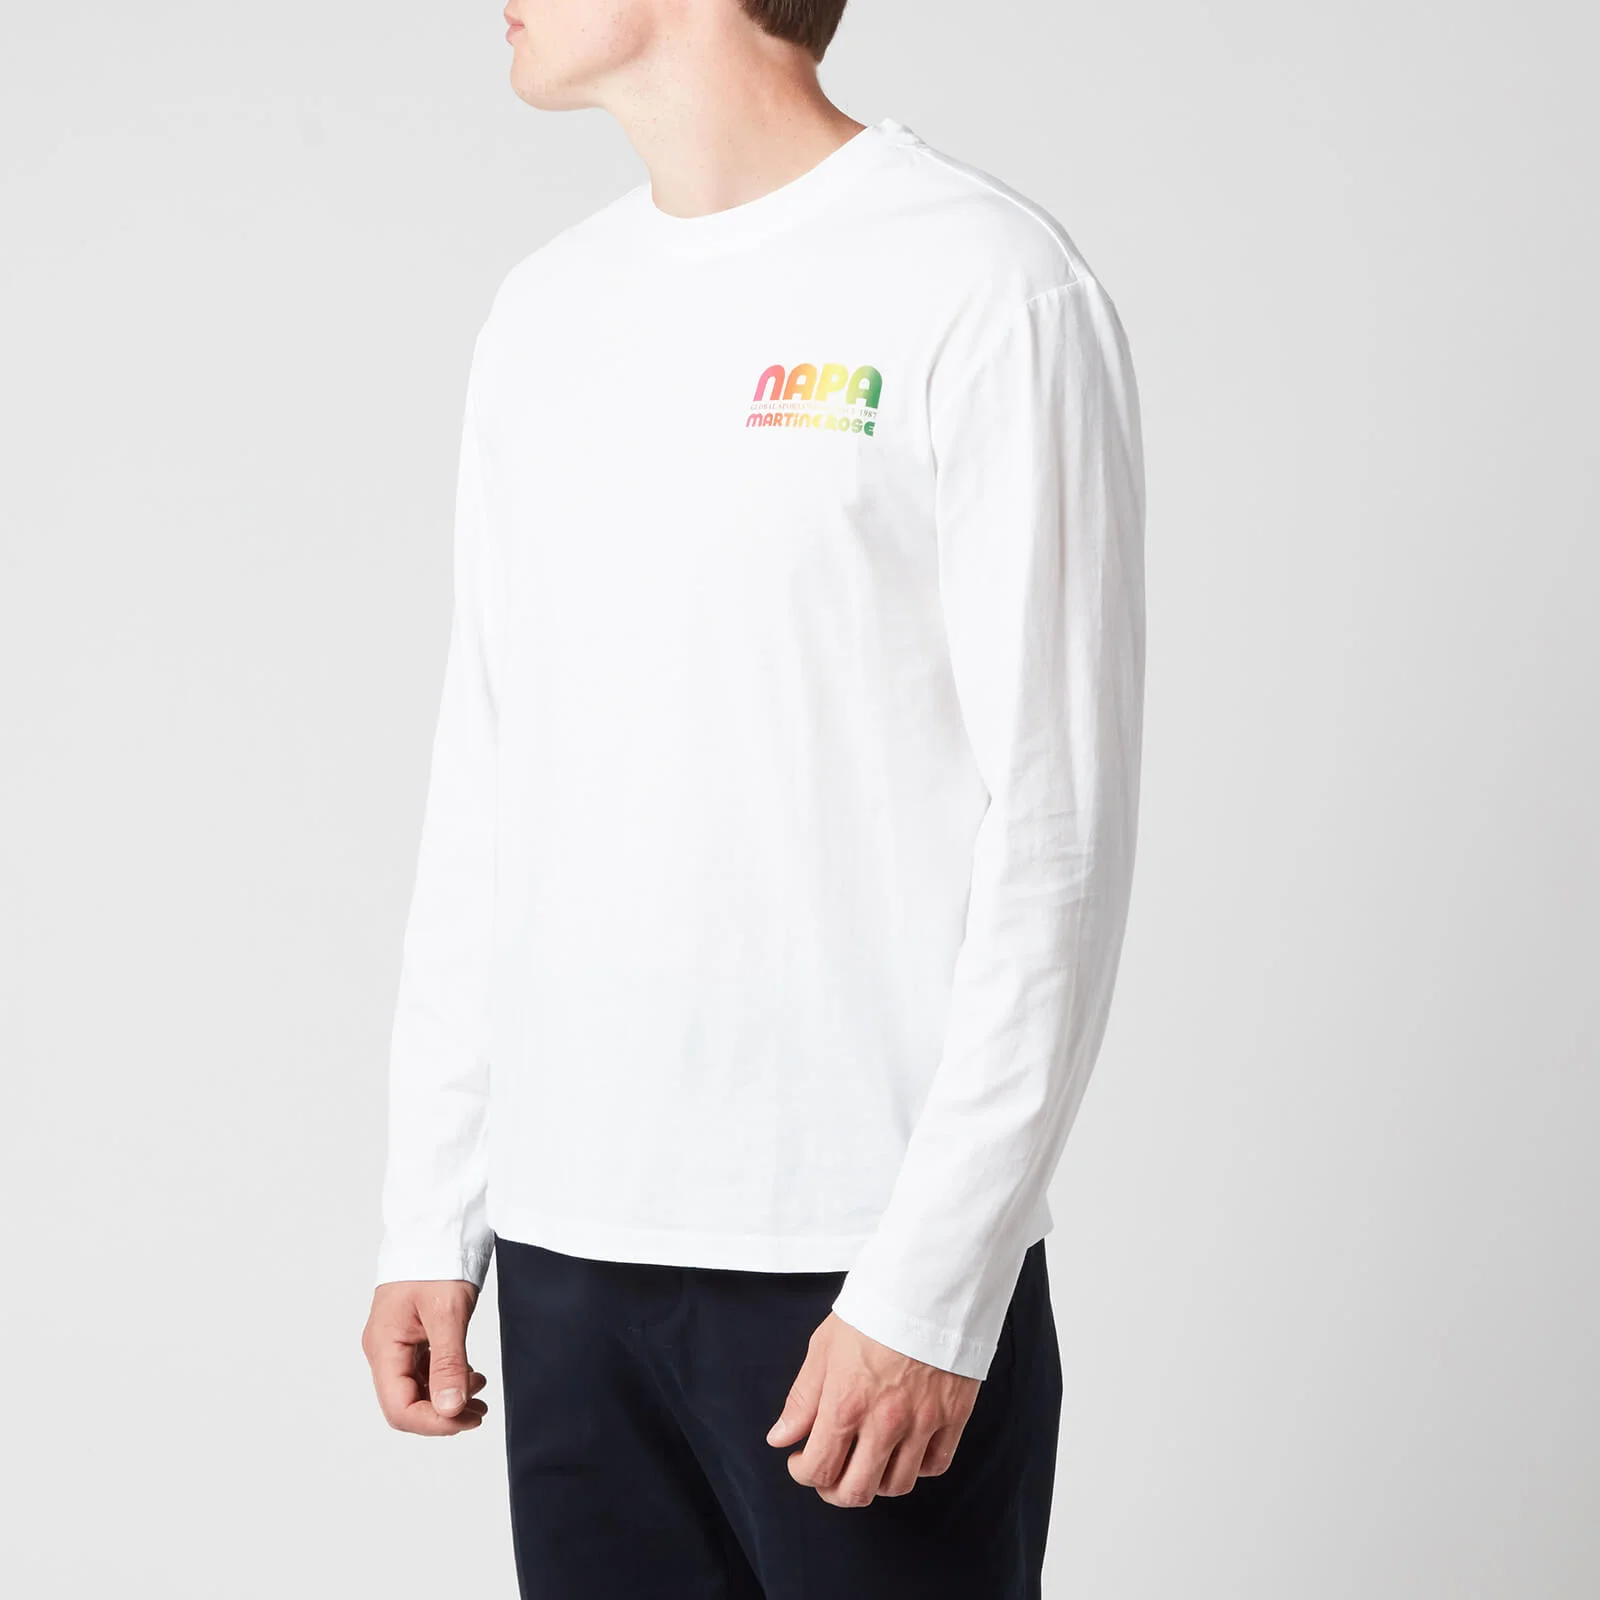 Napapijri X Martine Rose Men's S-Ogo Long Sleeve T-Shirt - Bright White Image 1